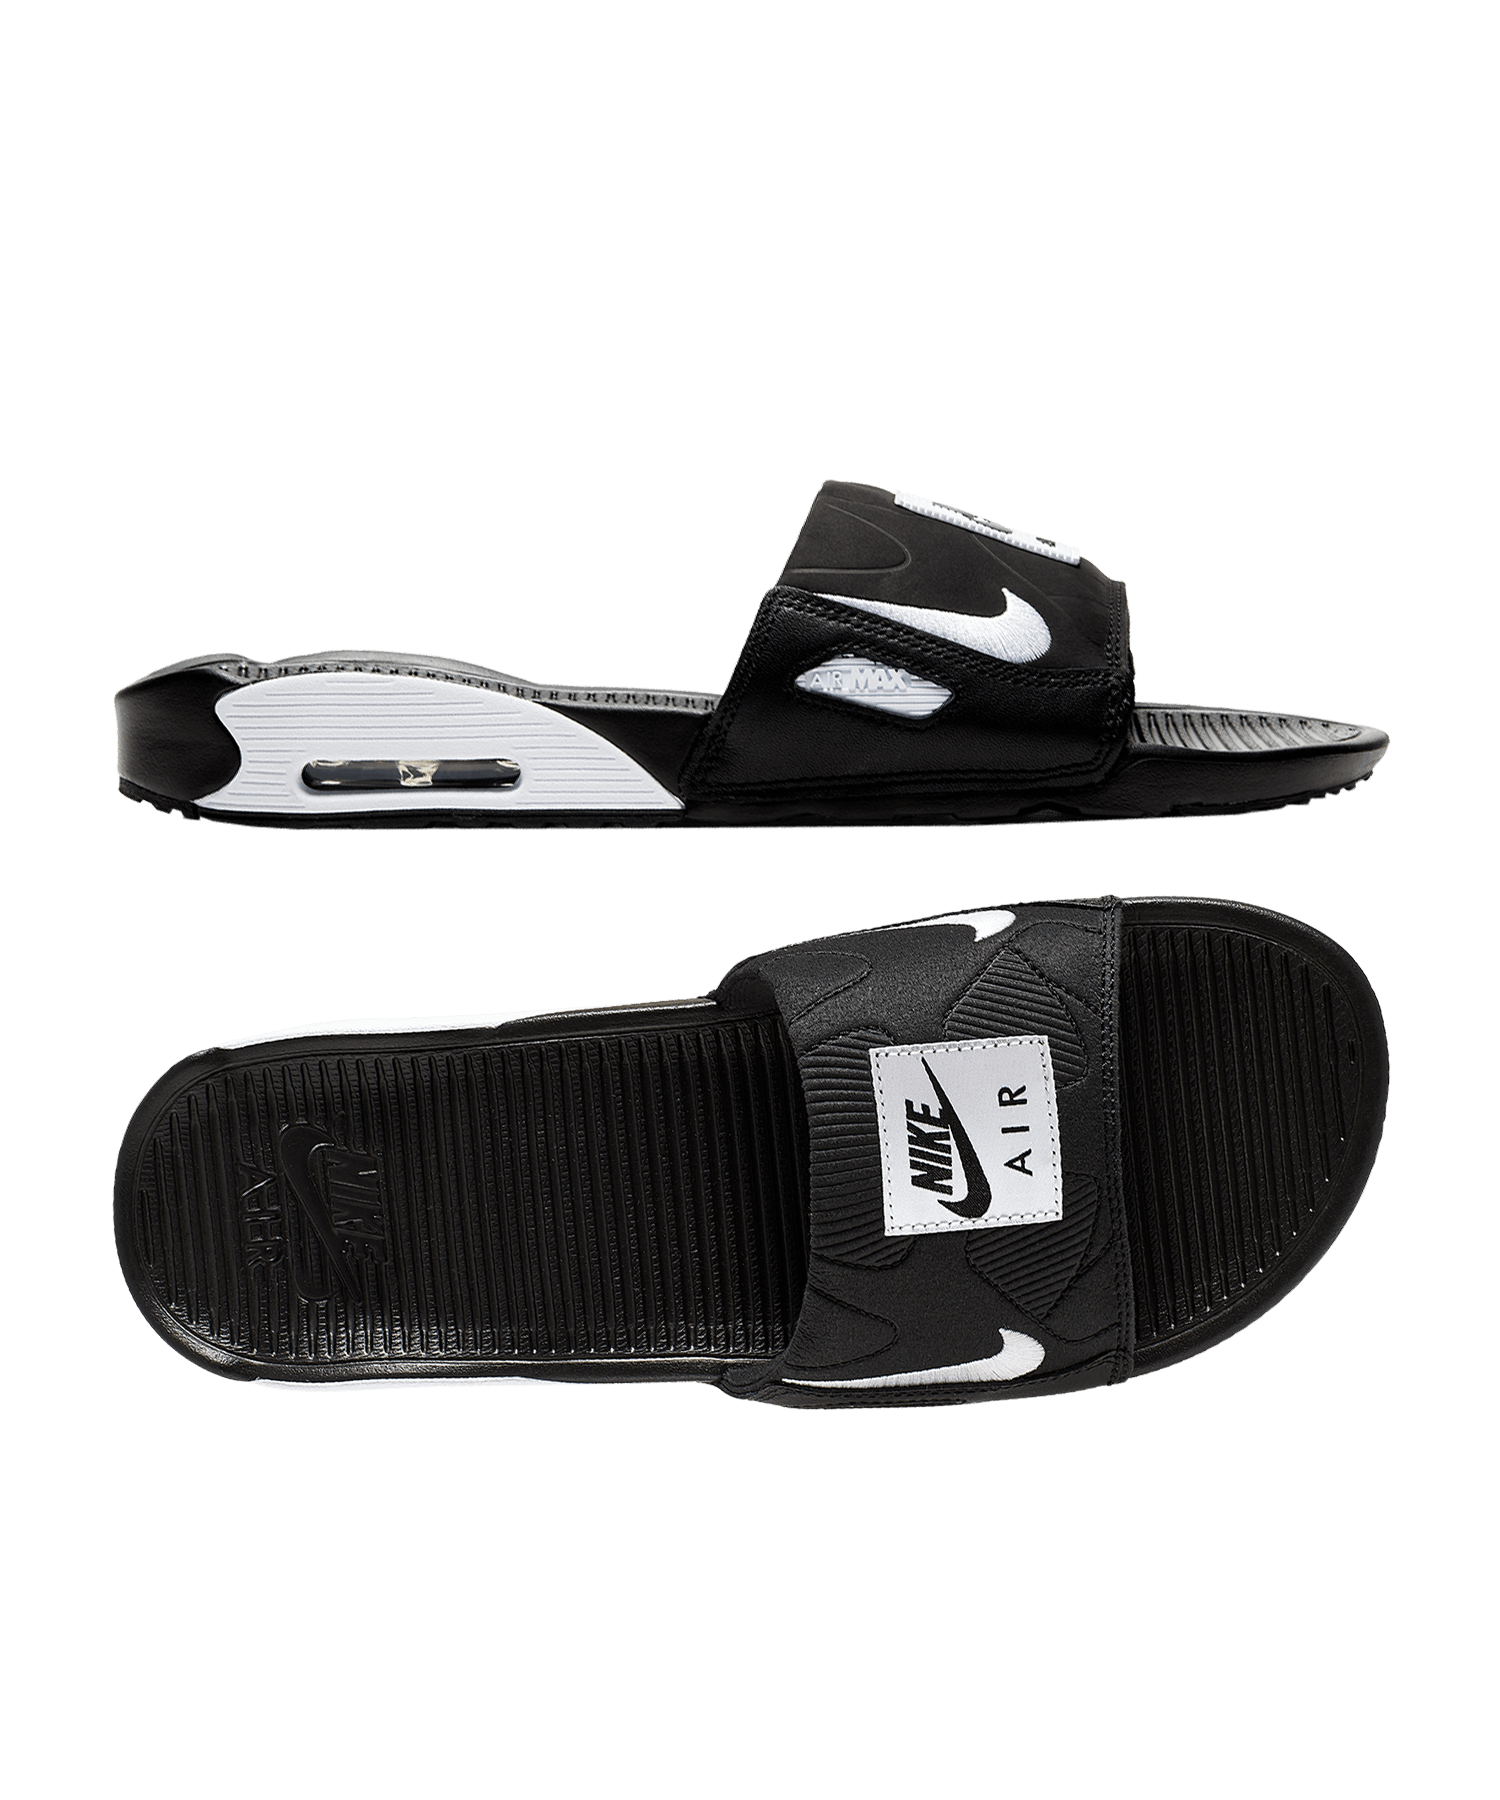 Vooruitzien Integratie redden Nike Air Max 90 Slide Sandal - Black